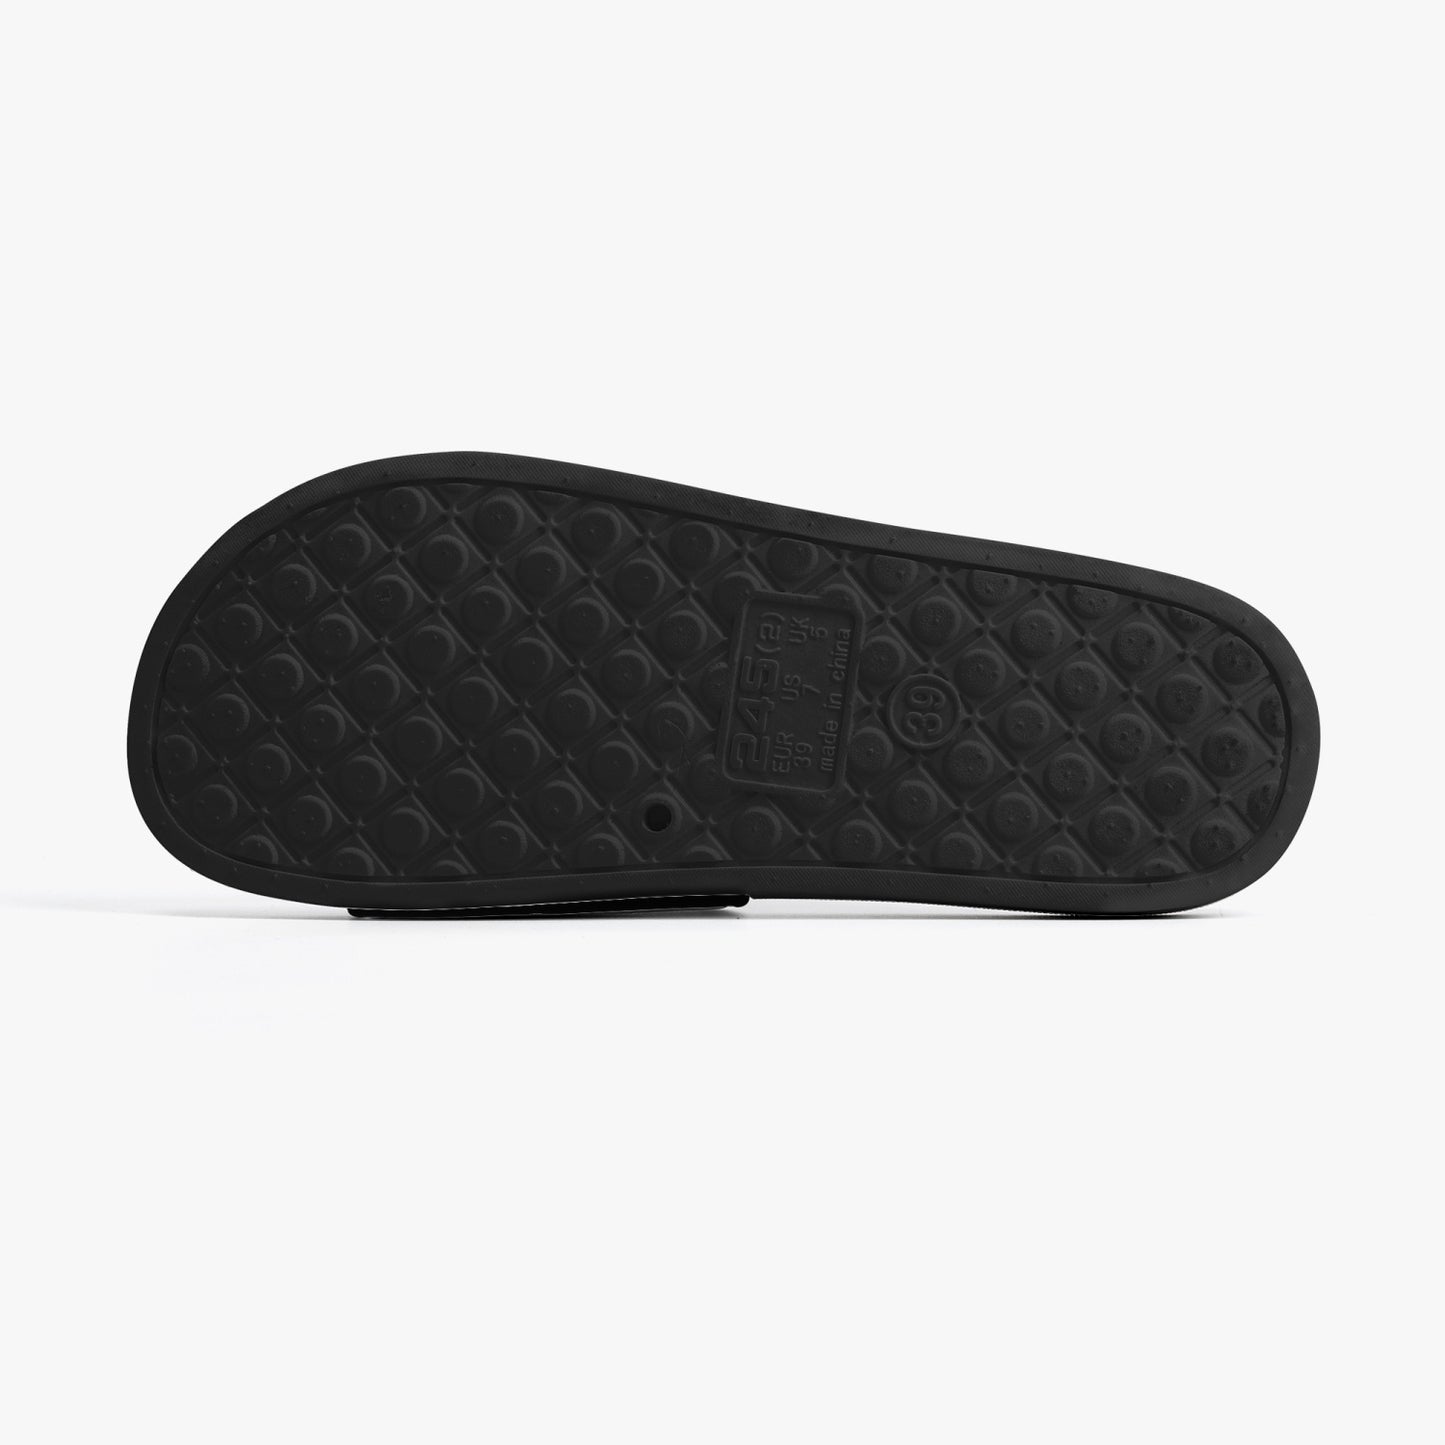 G-Inc'd Tread Sandals (Black) Unisex